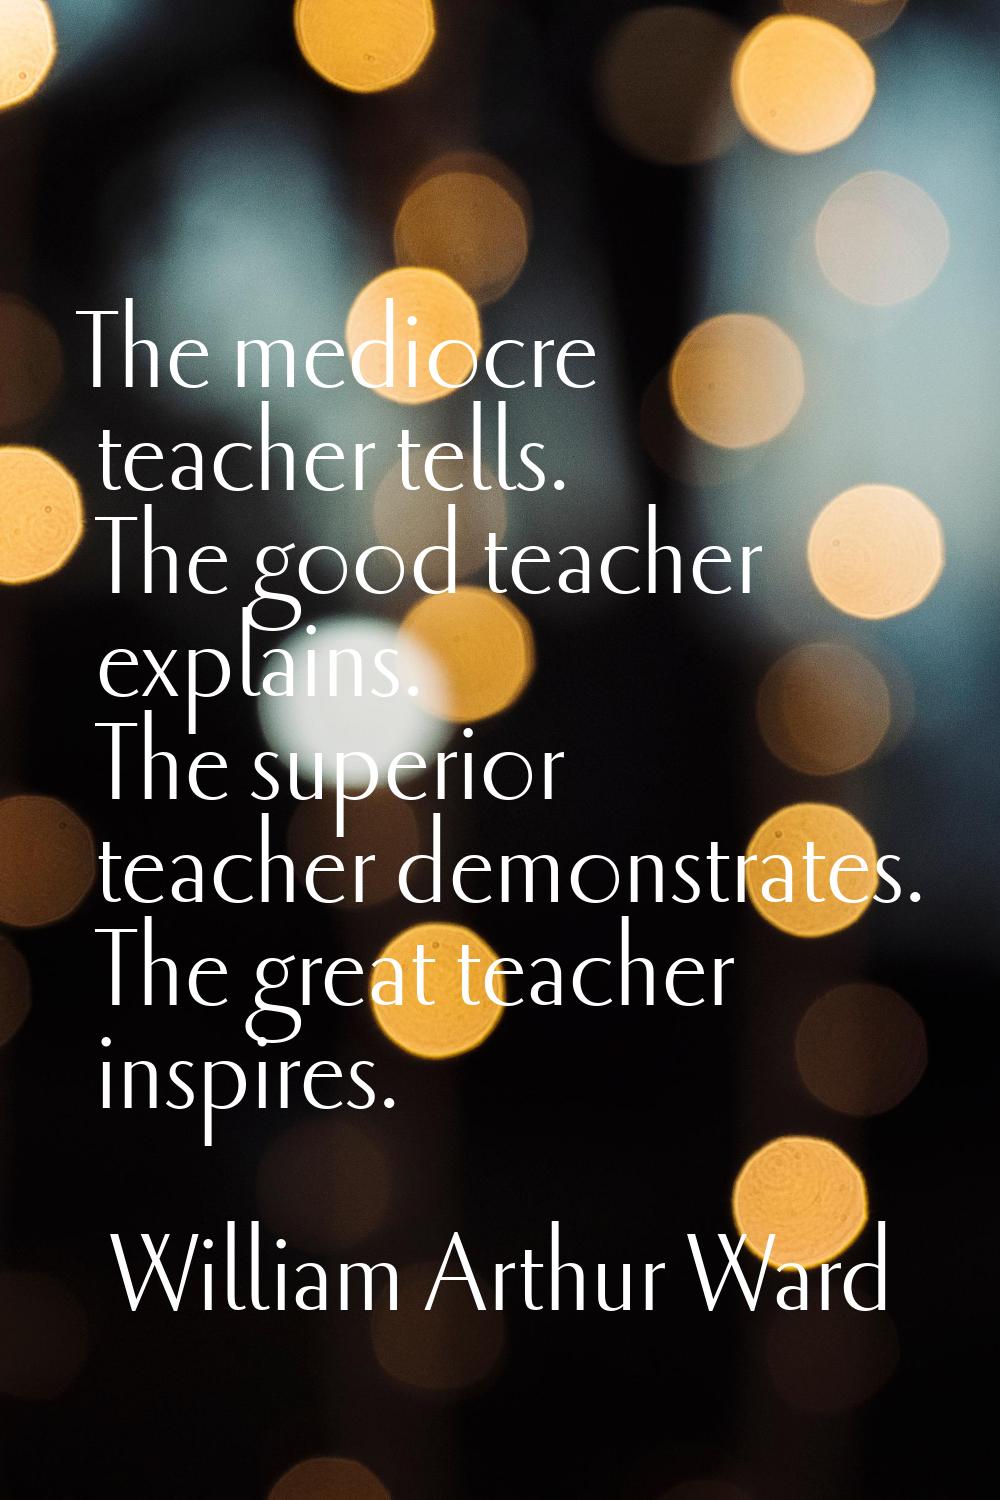 The mediocre teacher tells. The good teacher explains. The superior teacher demonstrates. The great